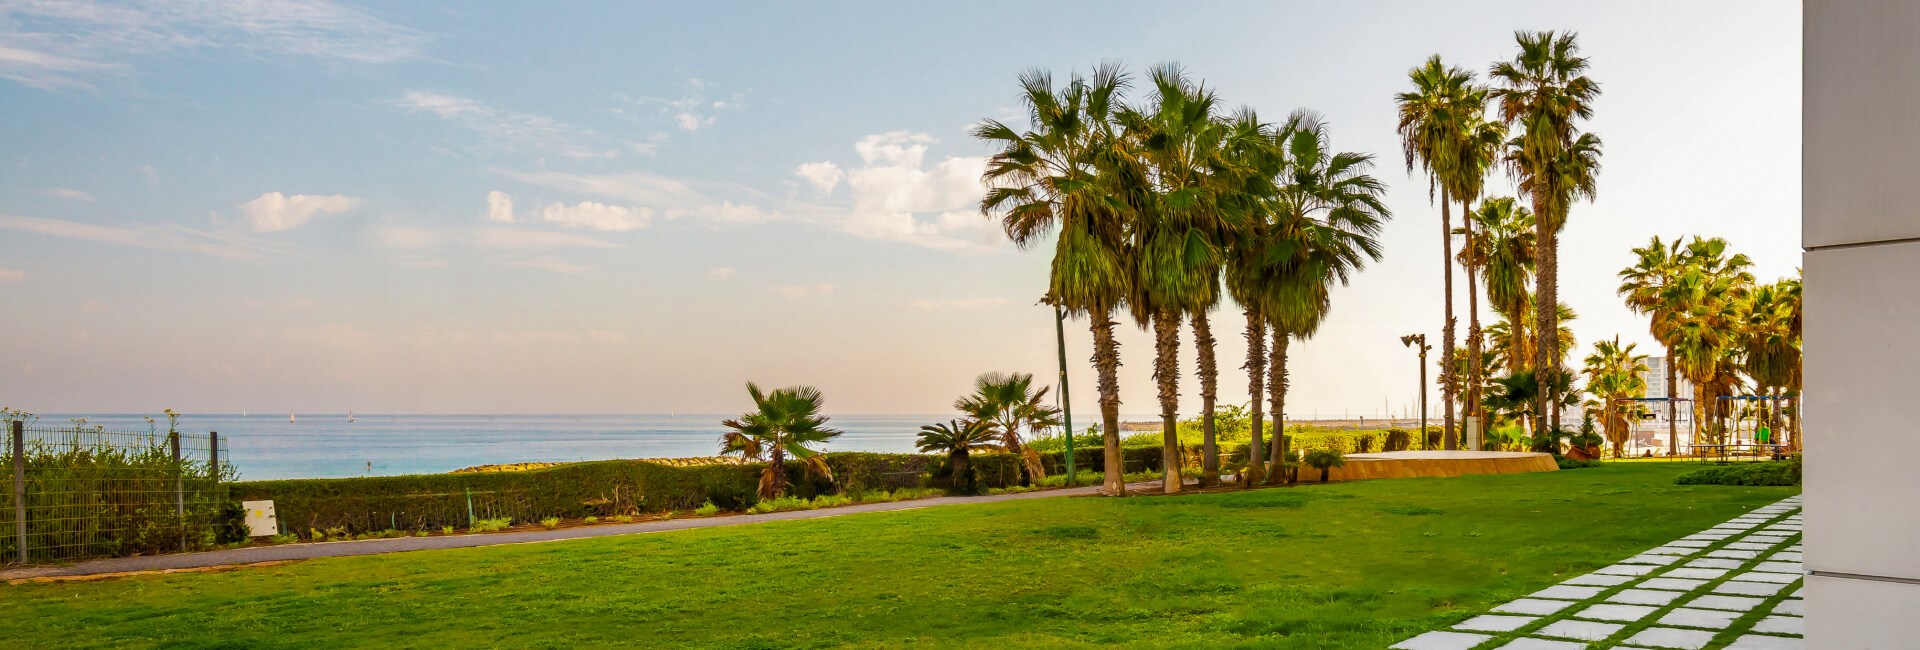 Daniel Herzliya Hotel | garden and palm trees